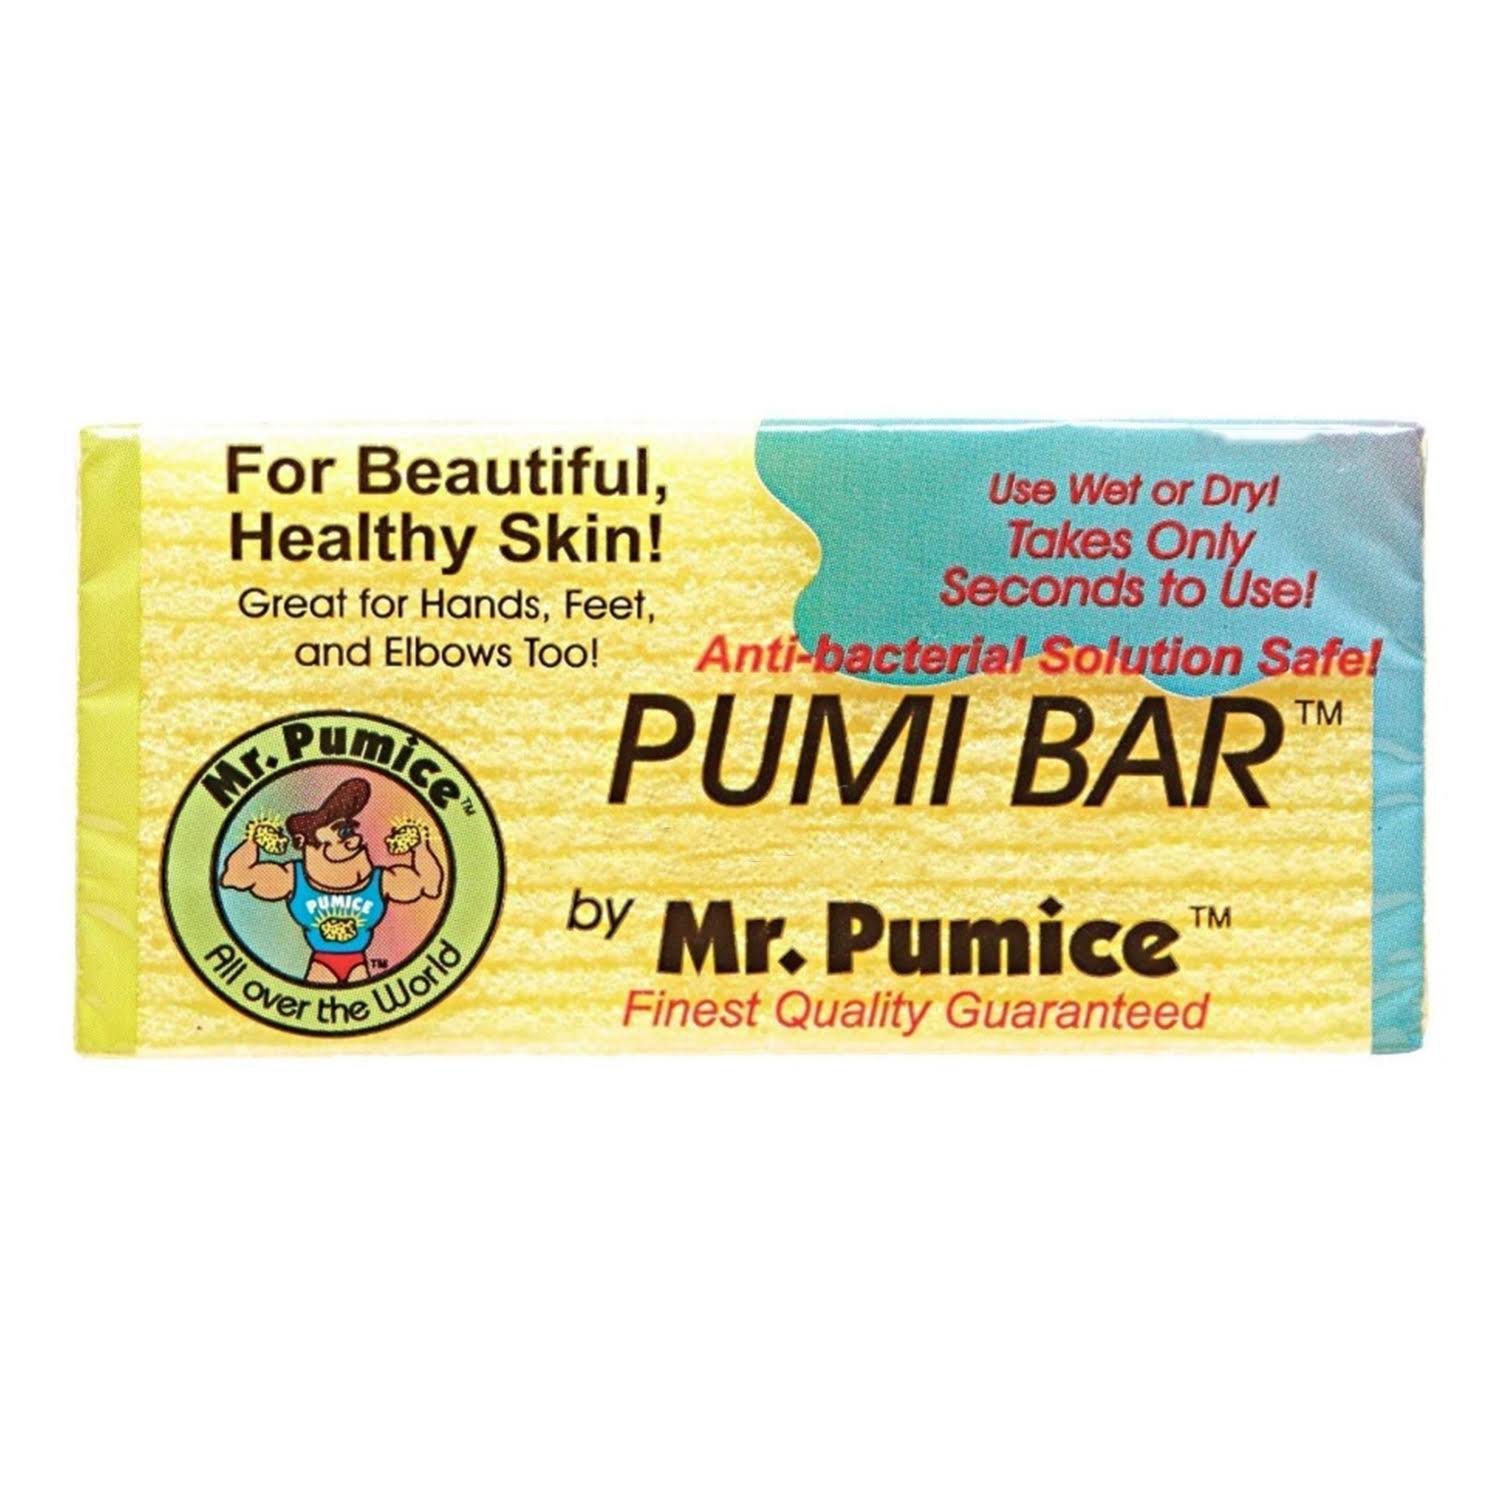 Mr. Pumice Pumi Bar (24 Pieces) Display X 1 Count